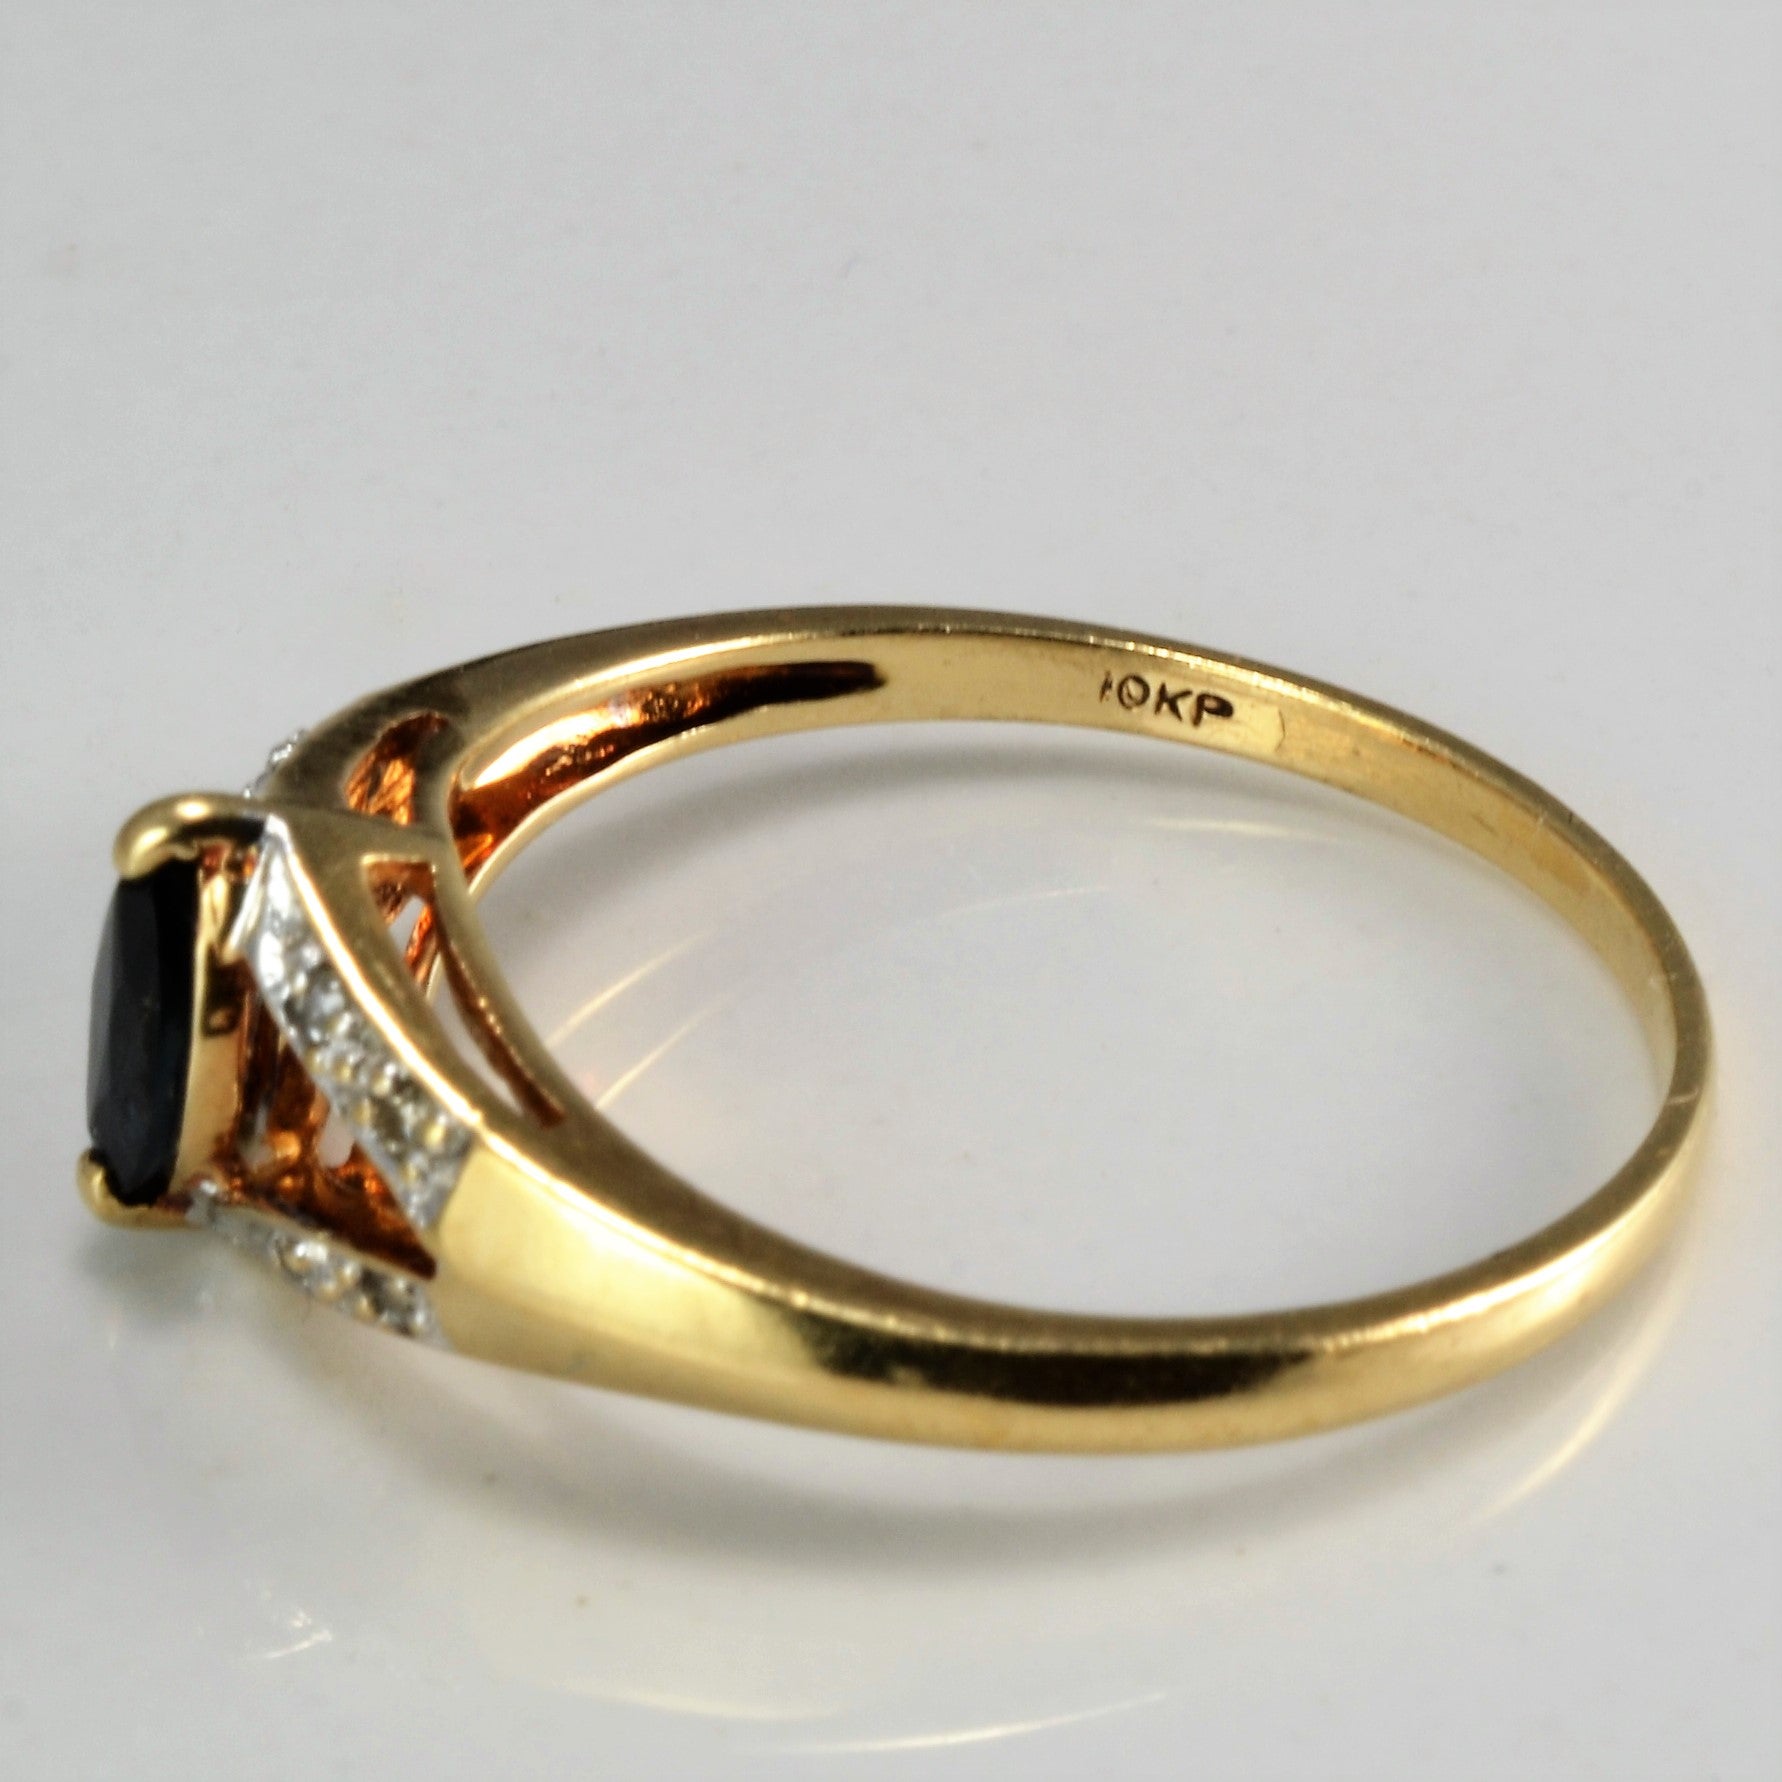 Chevron Diamond & Sapphire Ring | 0.02 ctw, SZ 6.5 |